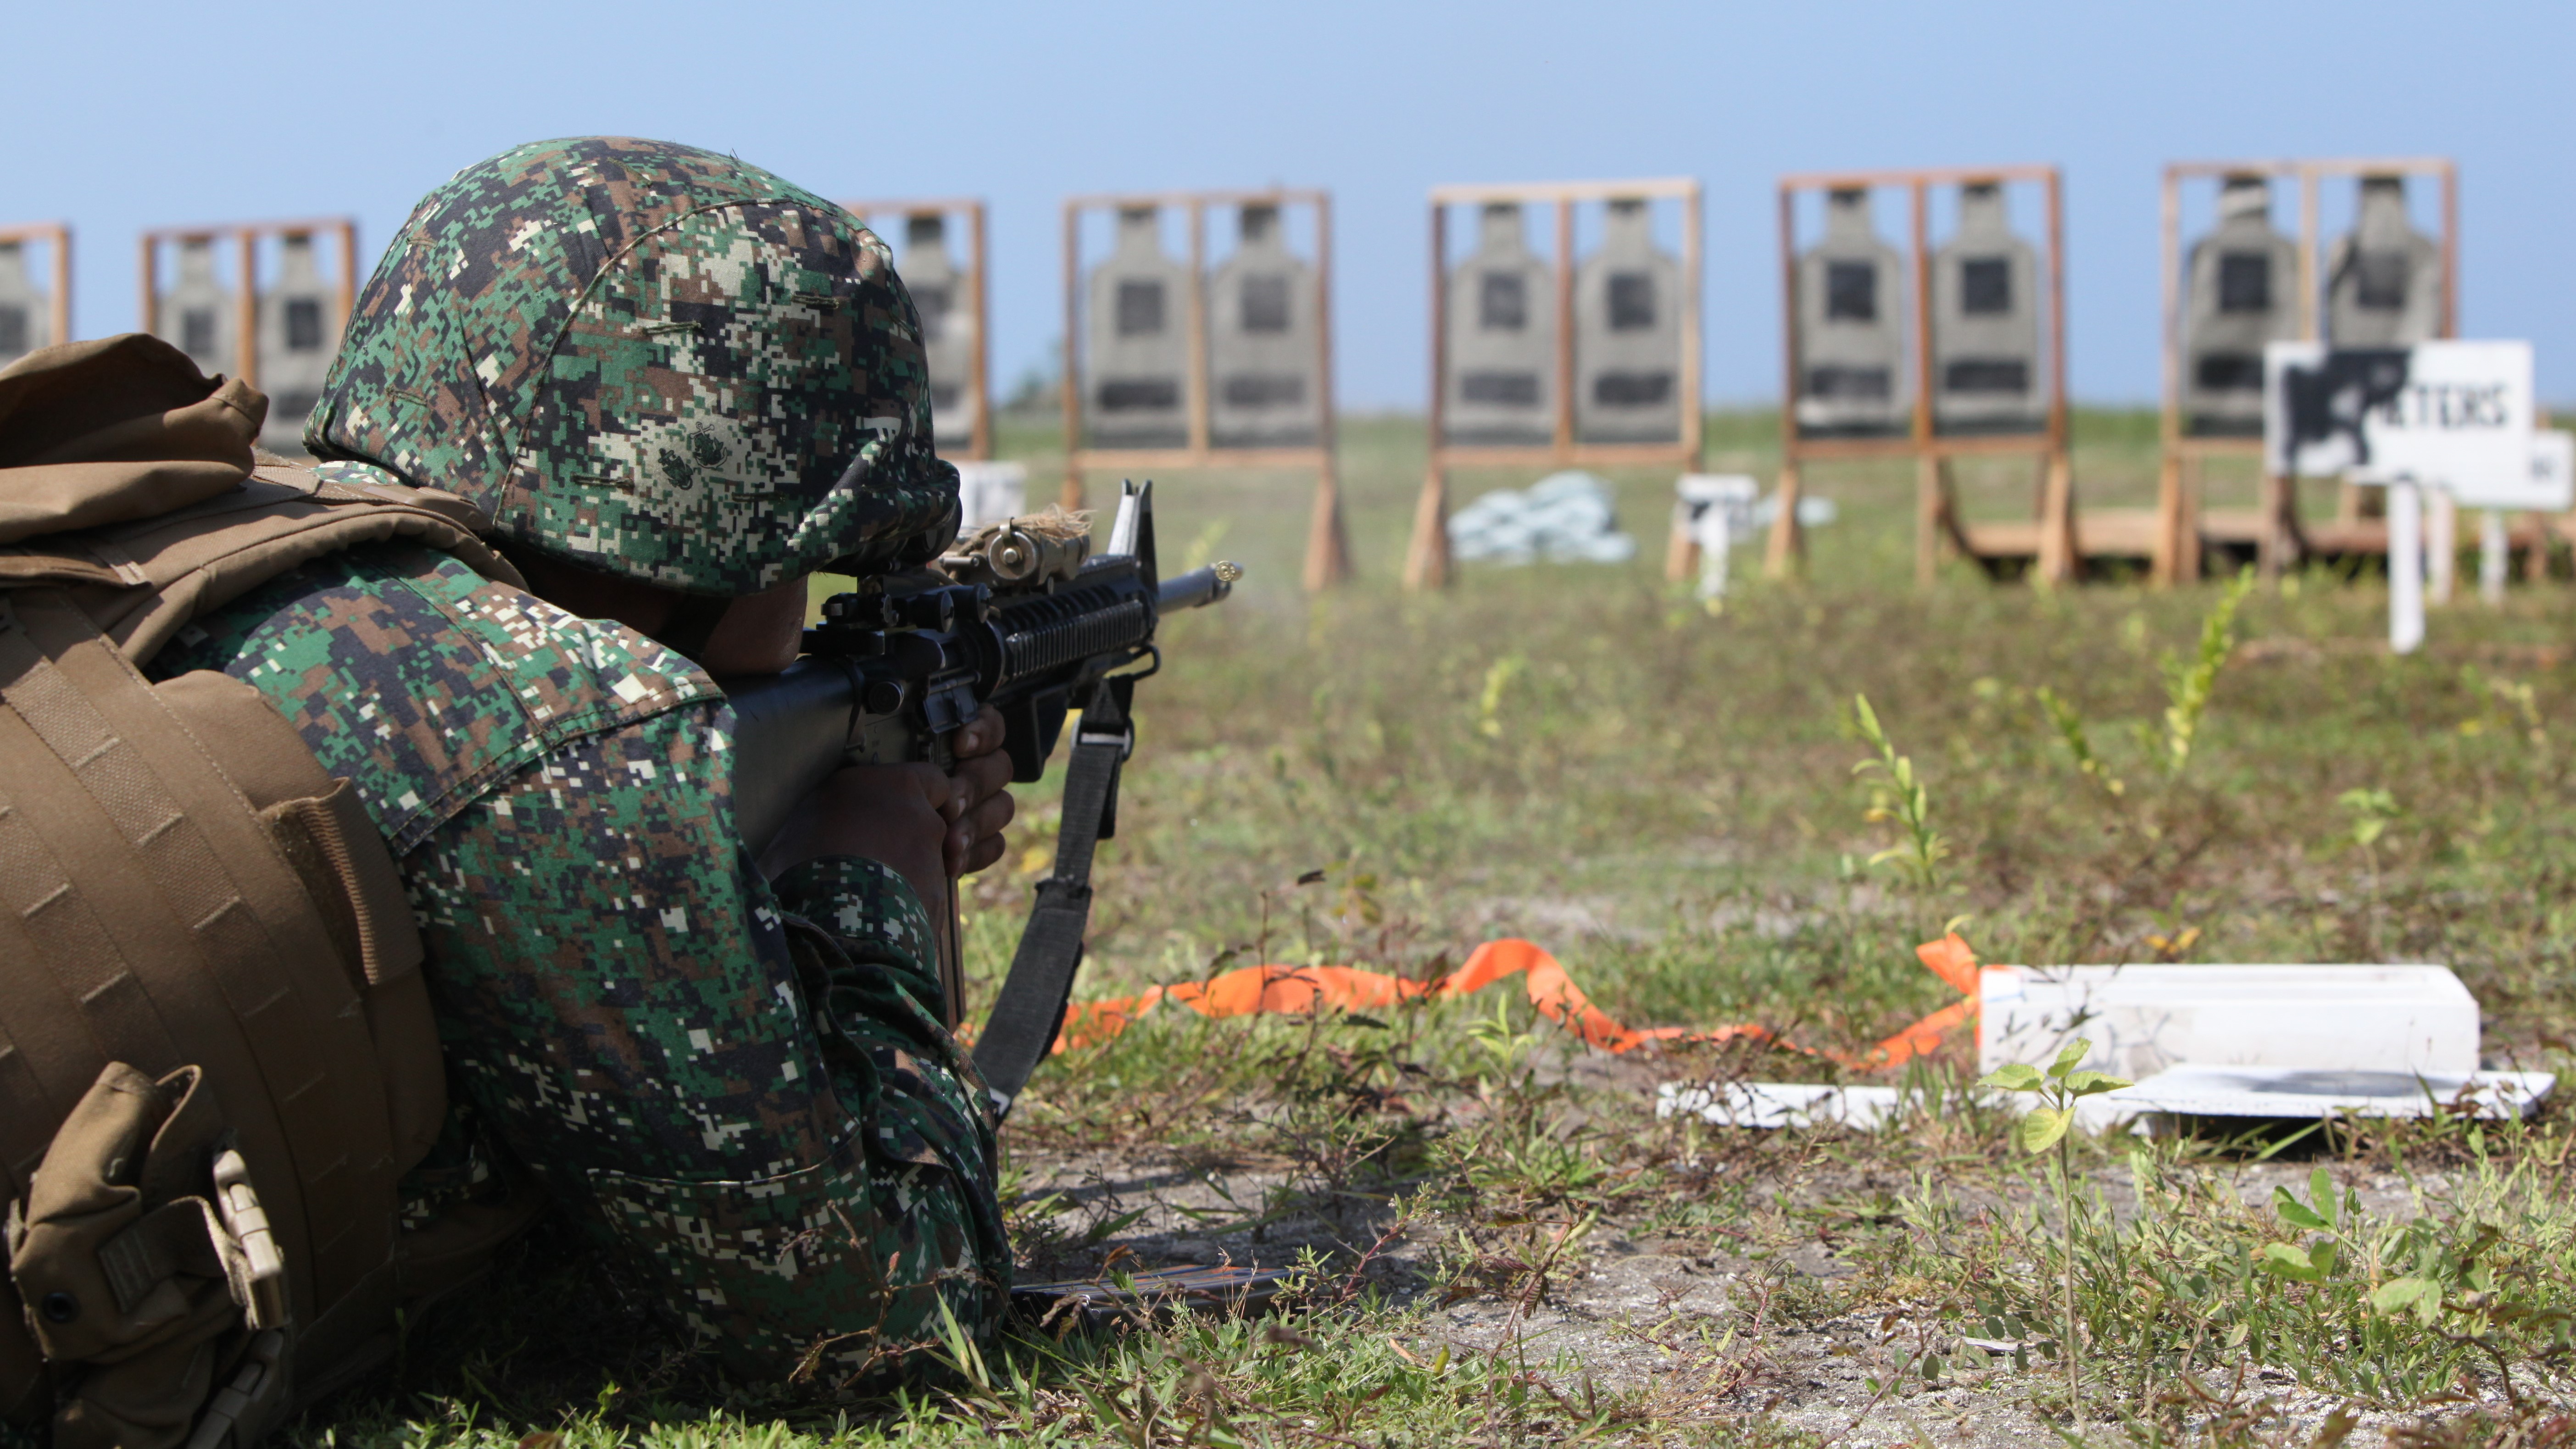 Marine Corps Shooting Range 1.jpg